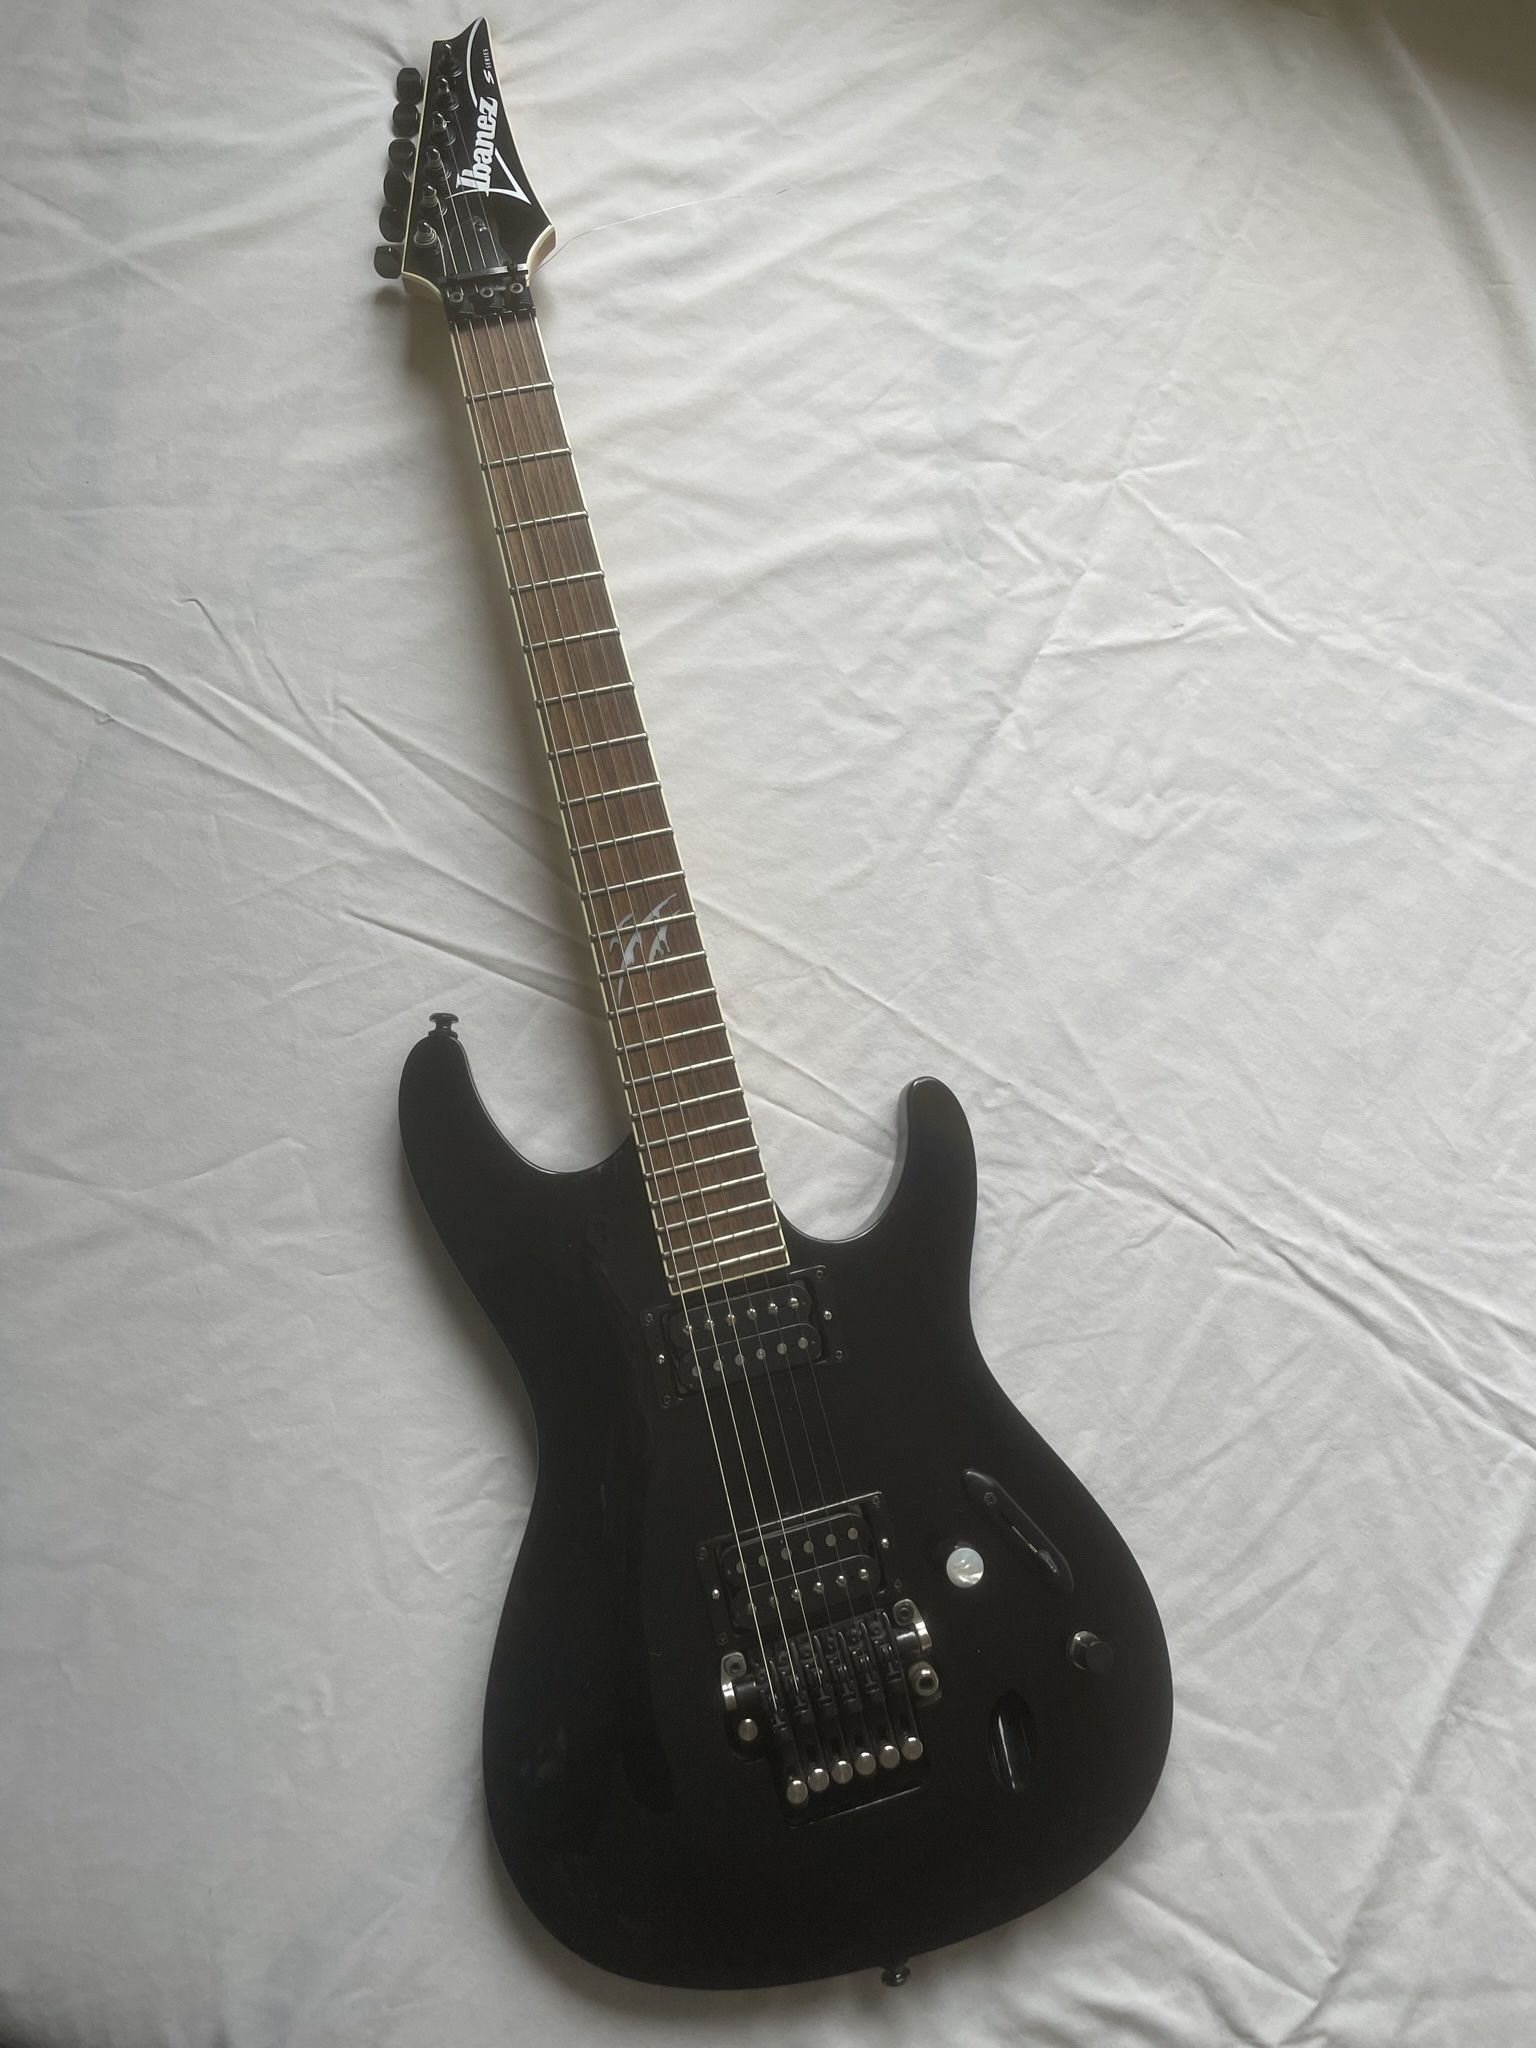 Ibanez S520 EX electric guitar